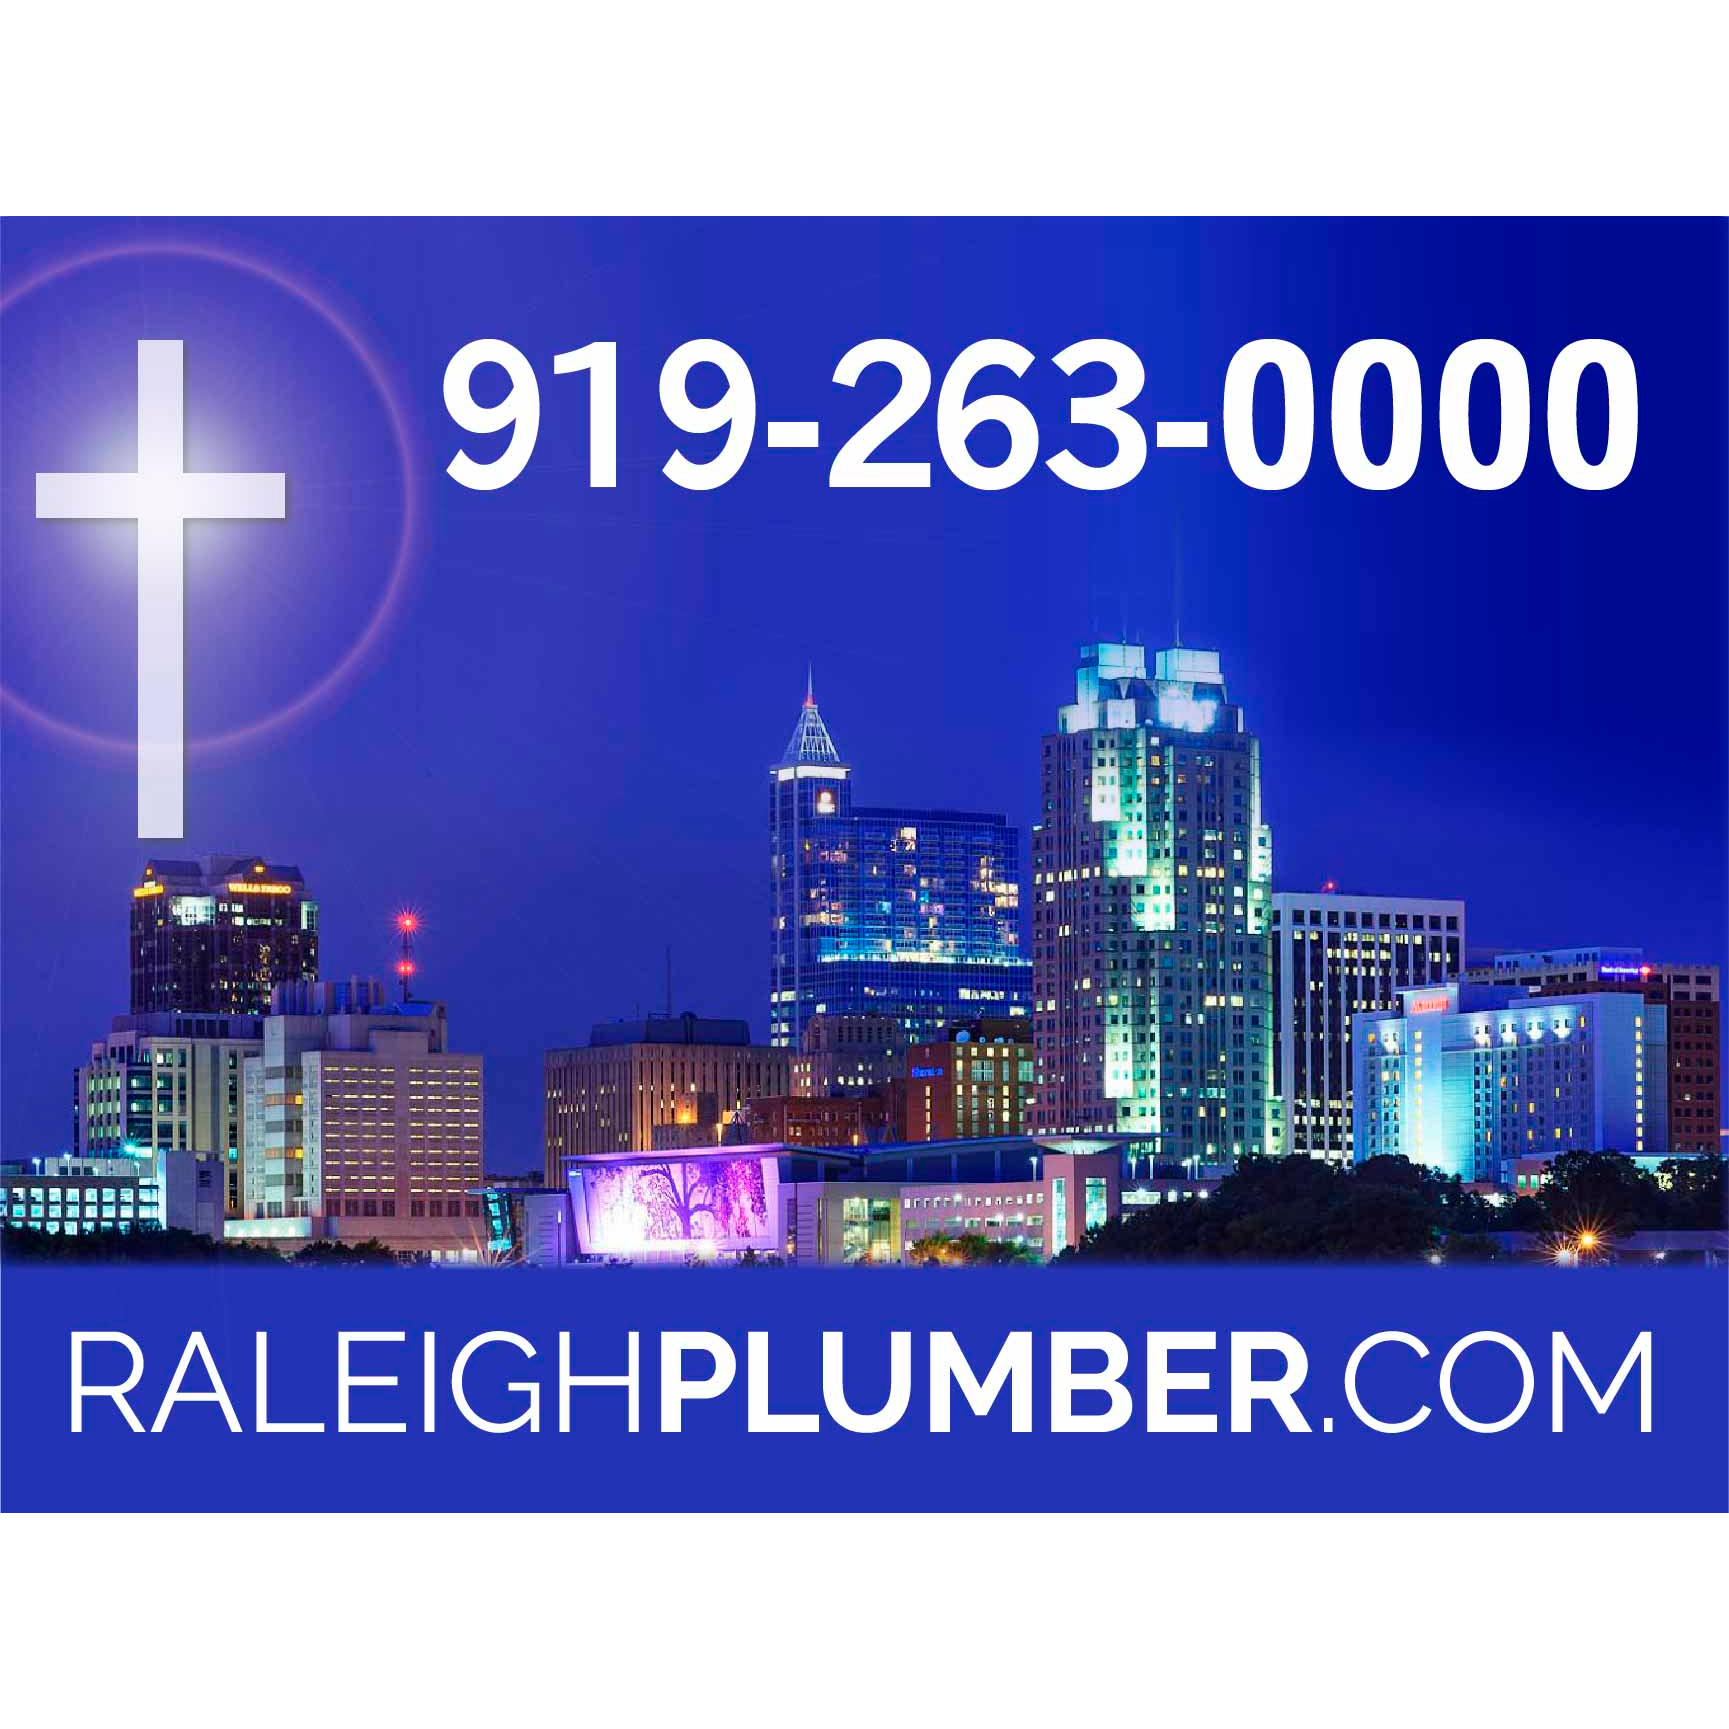 RaleighPlumber.com Photo